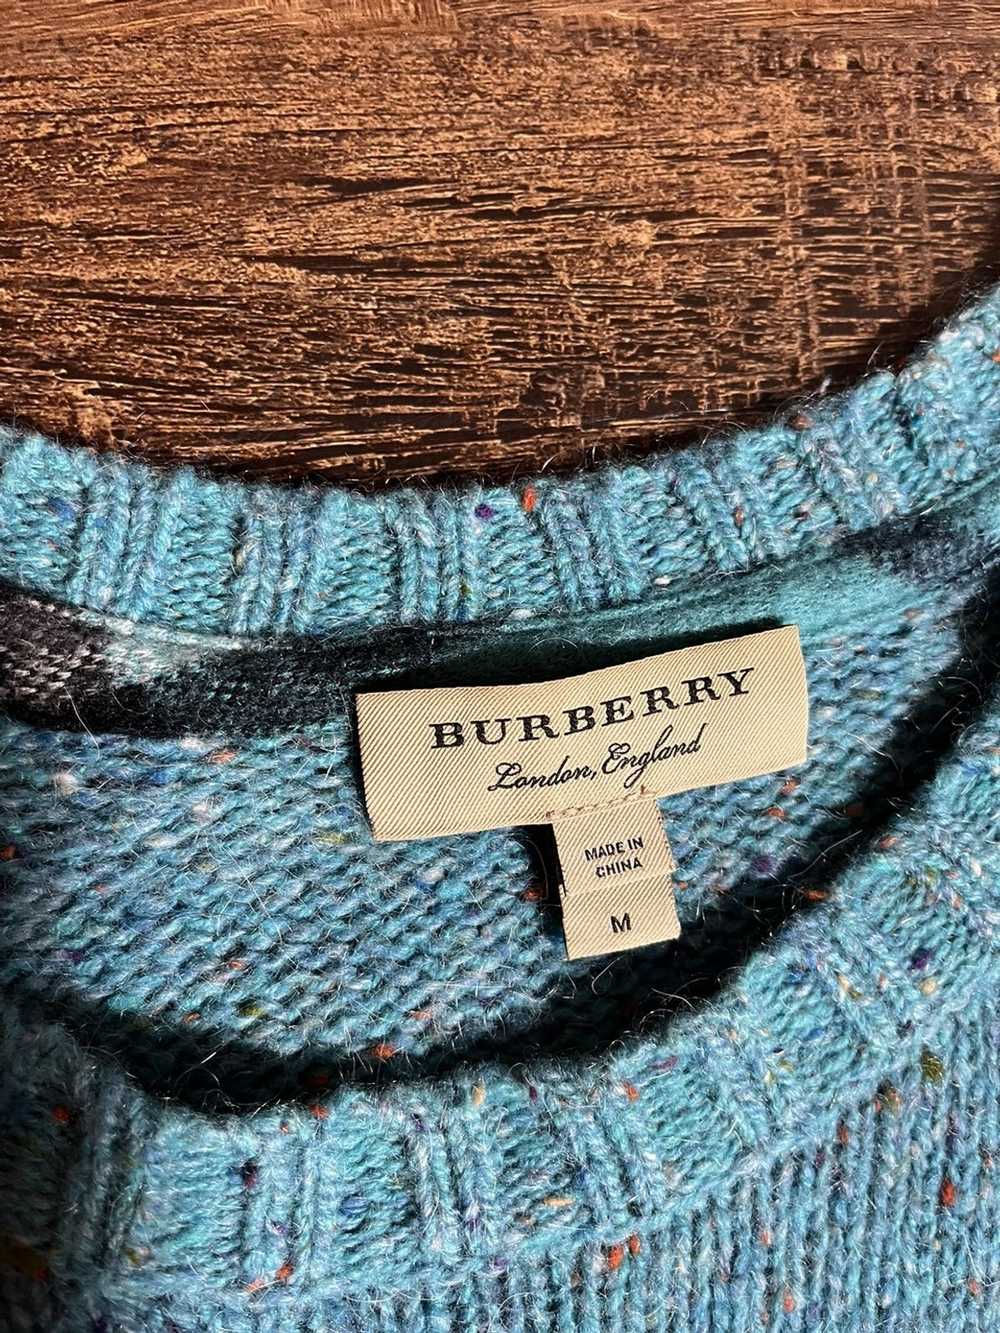 Burberry Burberry London England Merino Wool Swea… - image 2